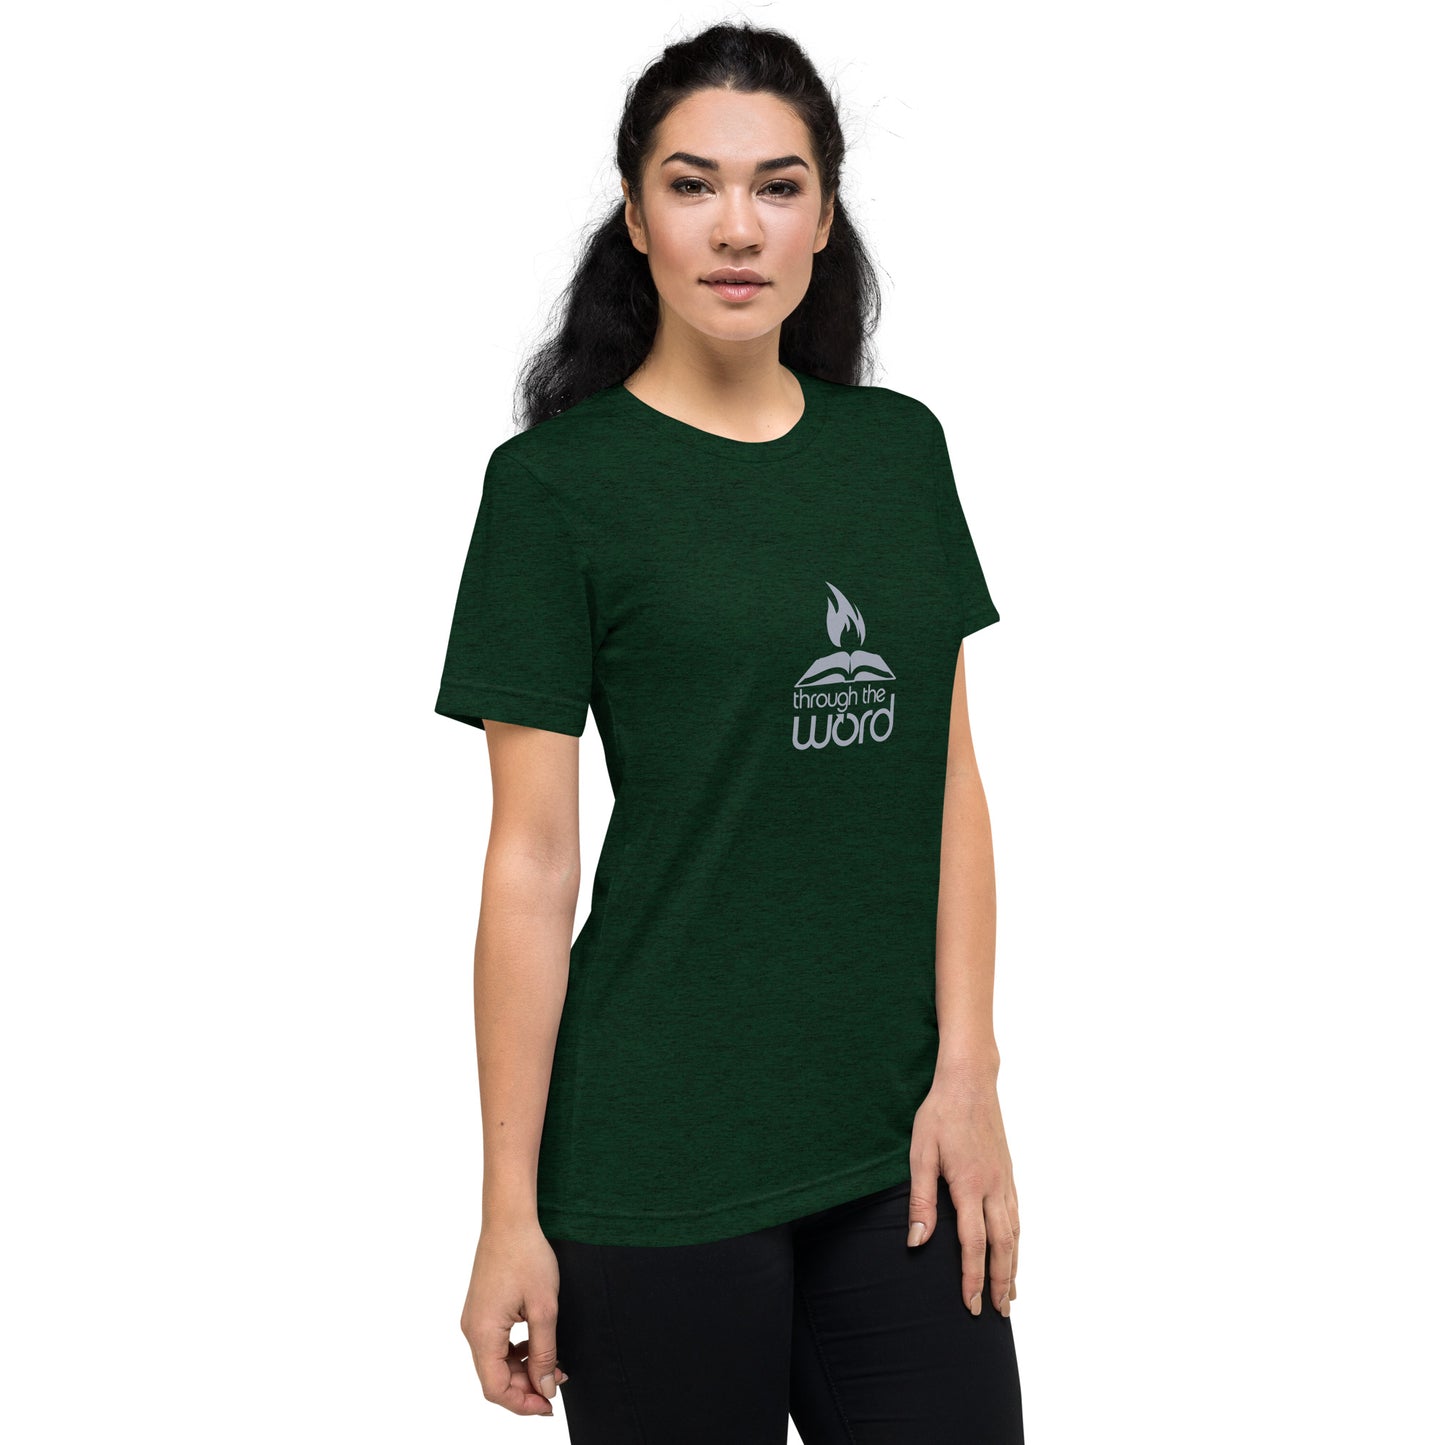 TTW Tri-Blend Premium T-Shirt - Vertical Logo